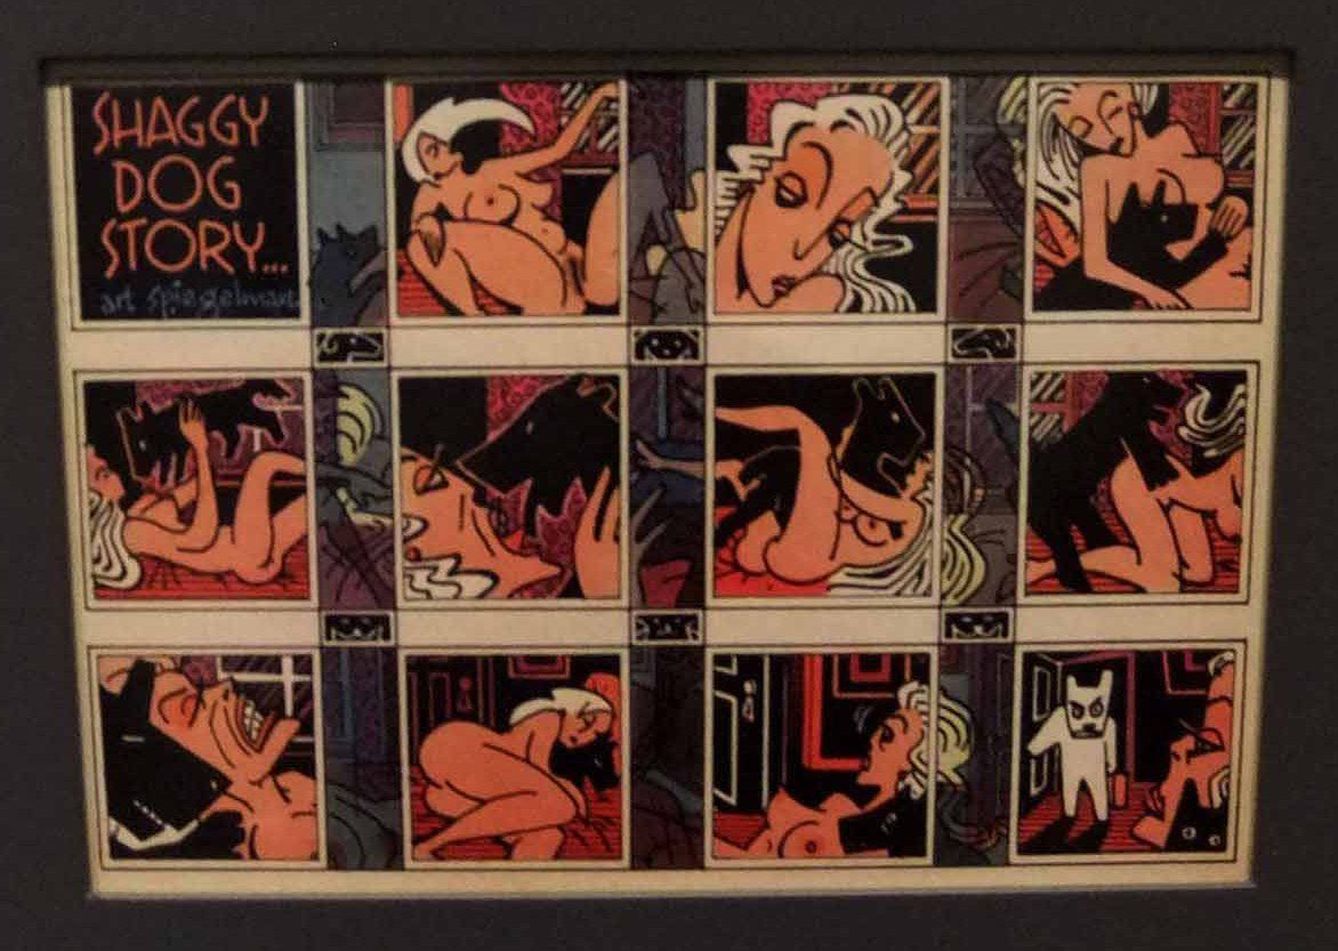 'Shaggy Dog Story', publicada por Spiegelman en 1979 en 'Playboy'.